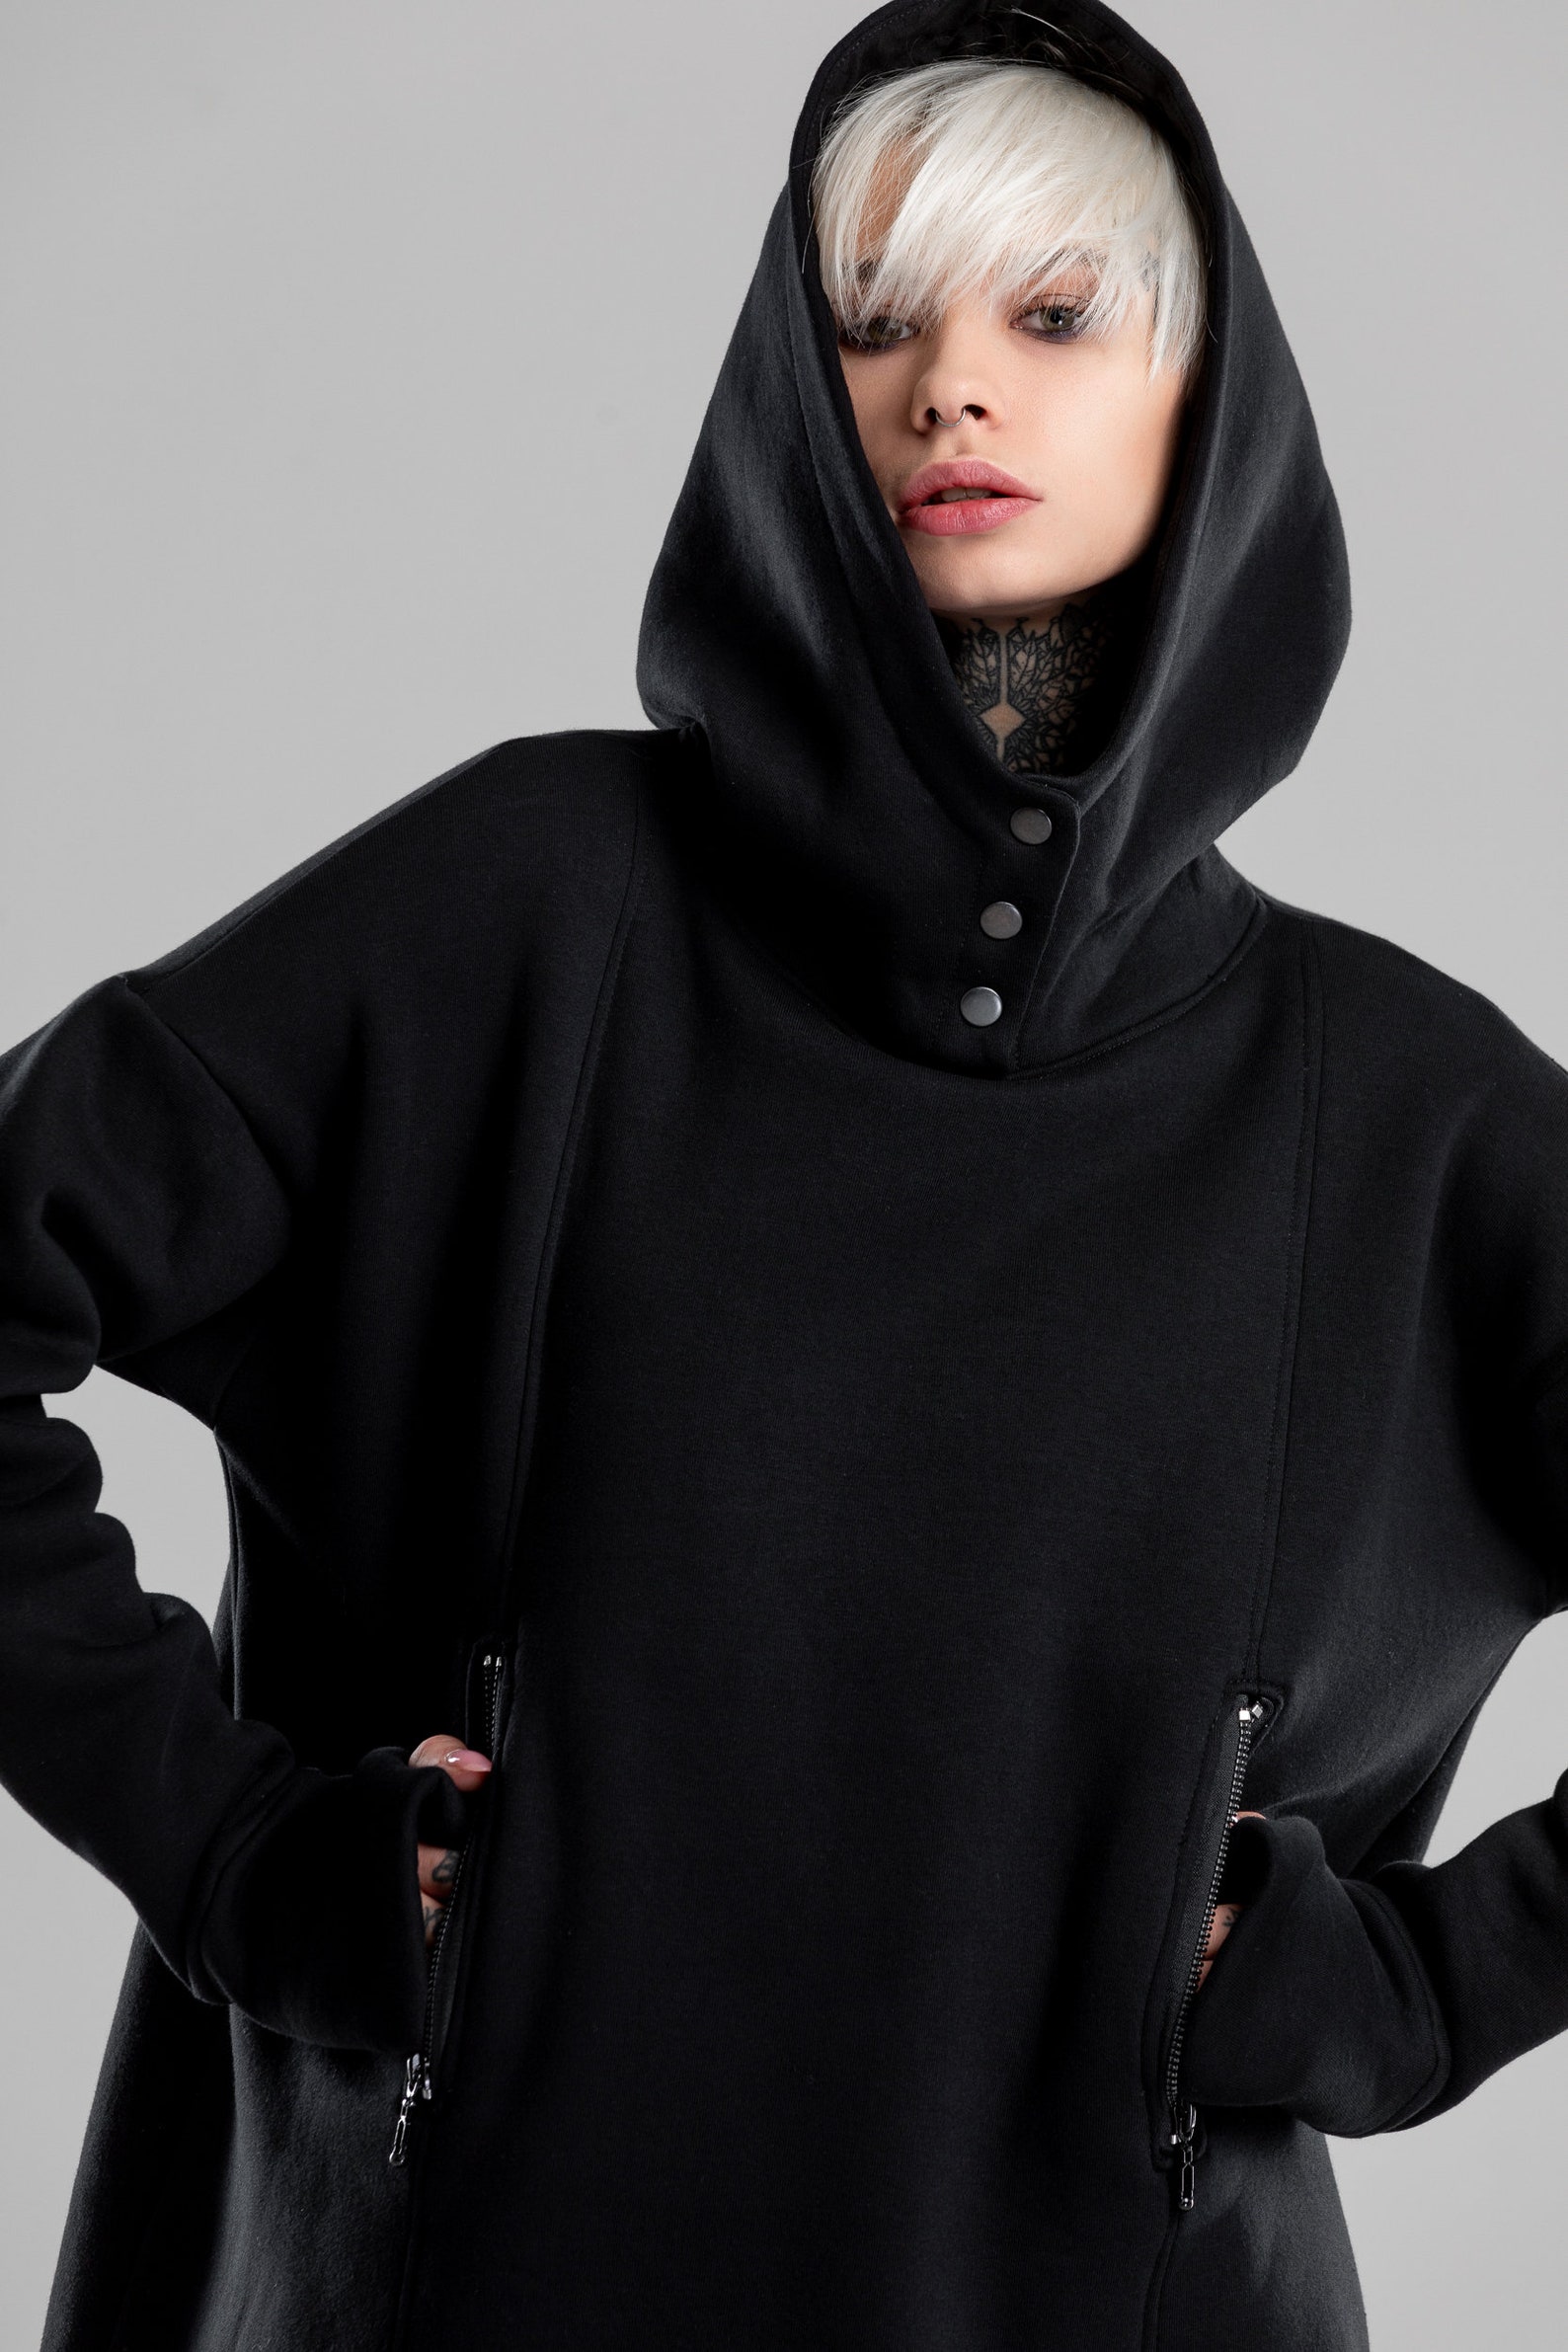 Black hooded dress loose fit dress long sleeves winter | Etsy